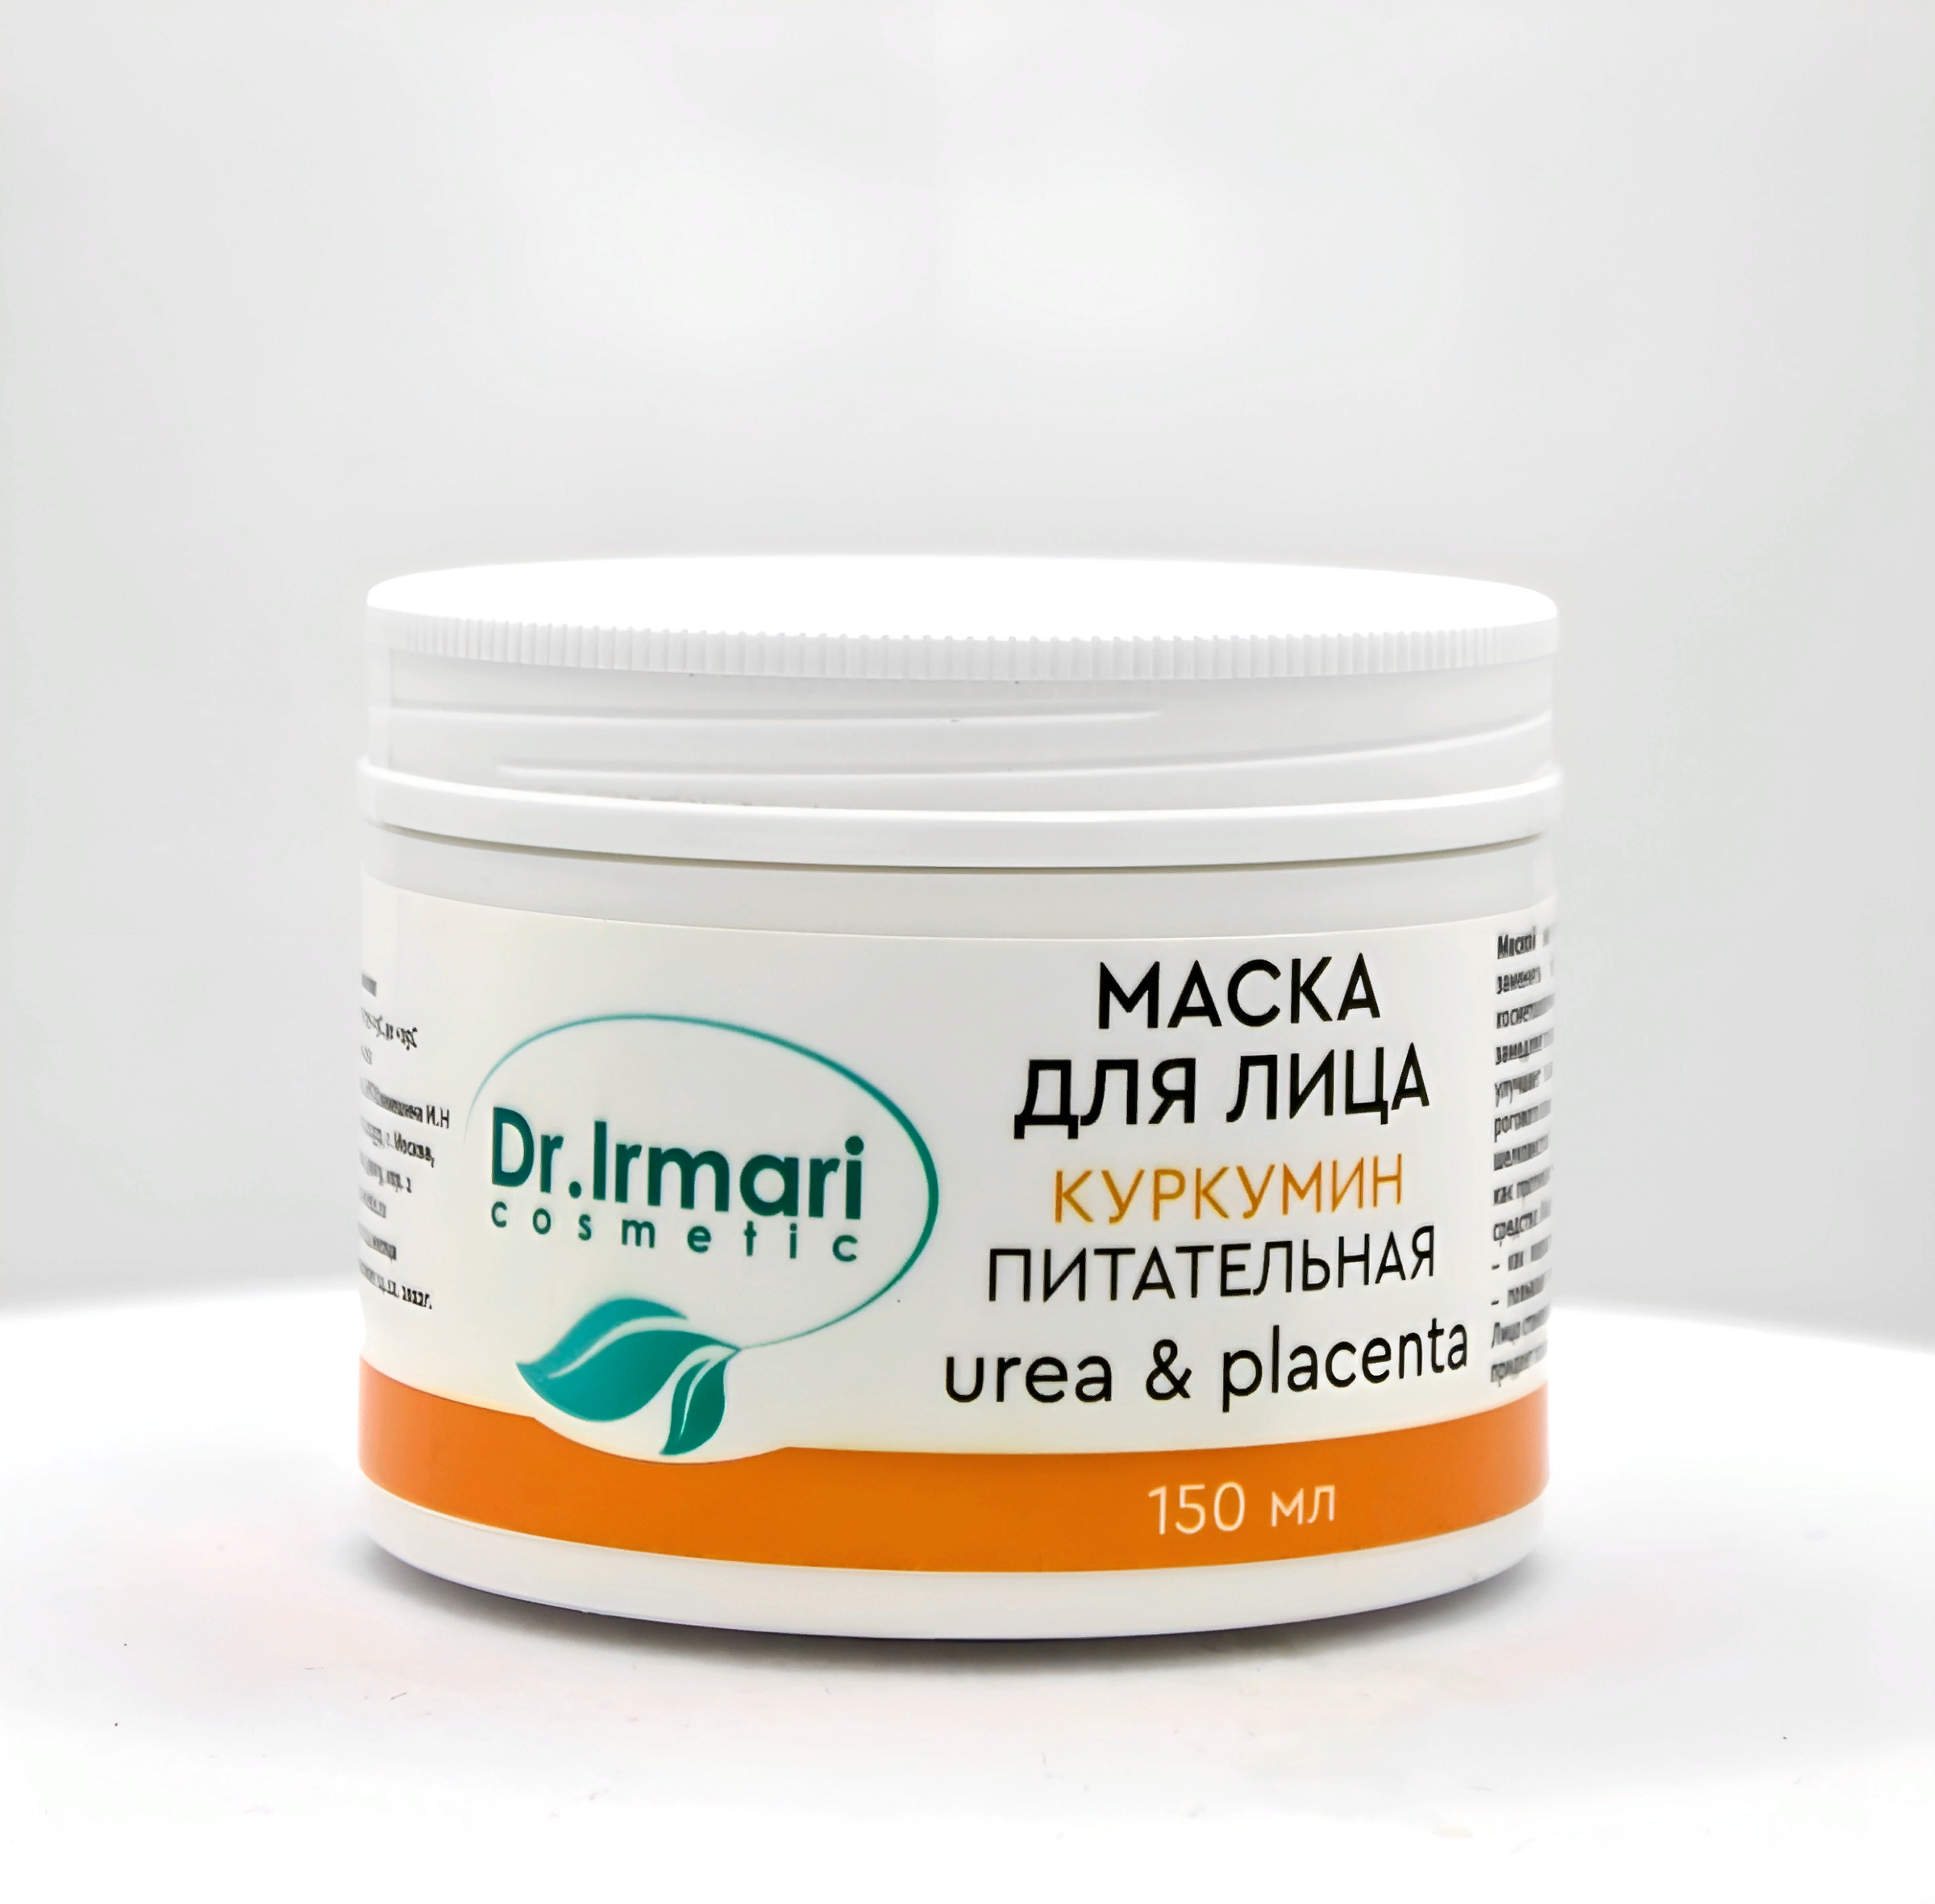 Маска для лица Dr.Irmari cosmetic Urea & Placenta Куркумин питательная 150 мл маска для лица dr irmari cosmetic urea